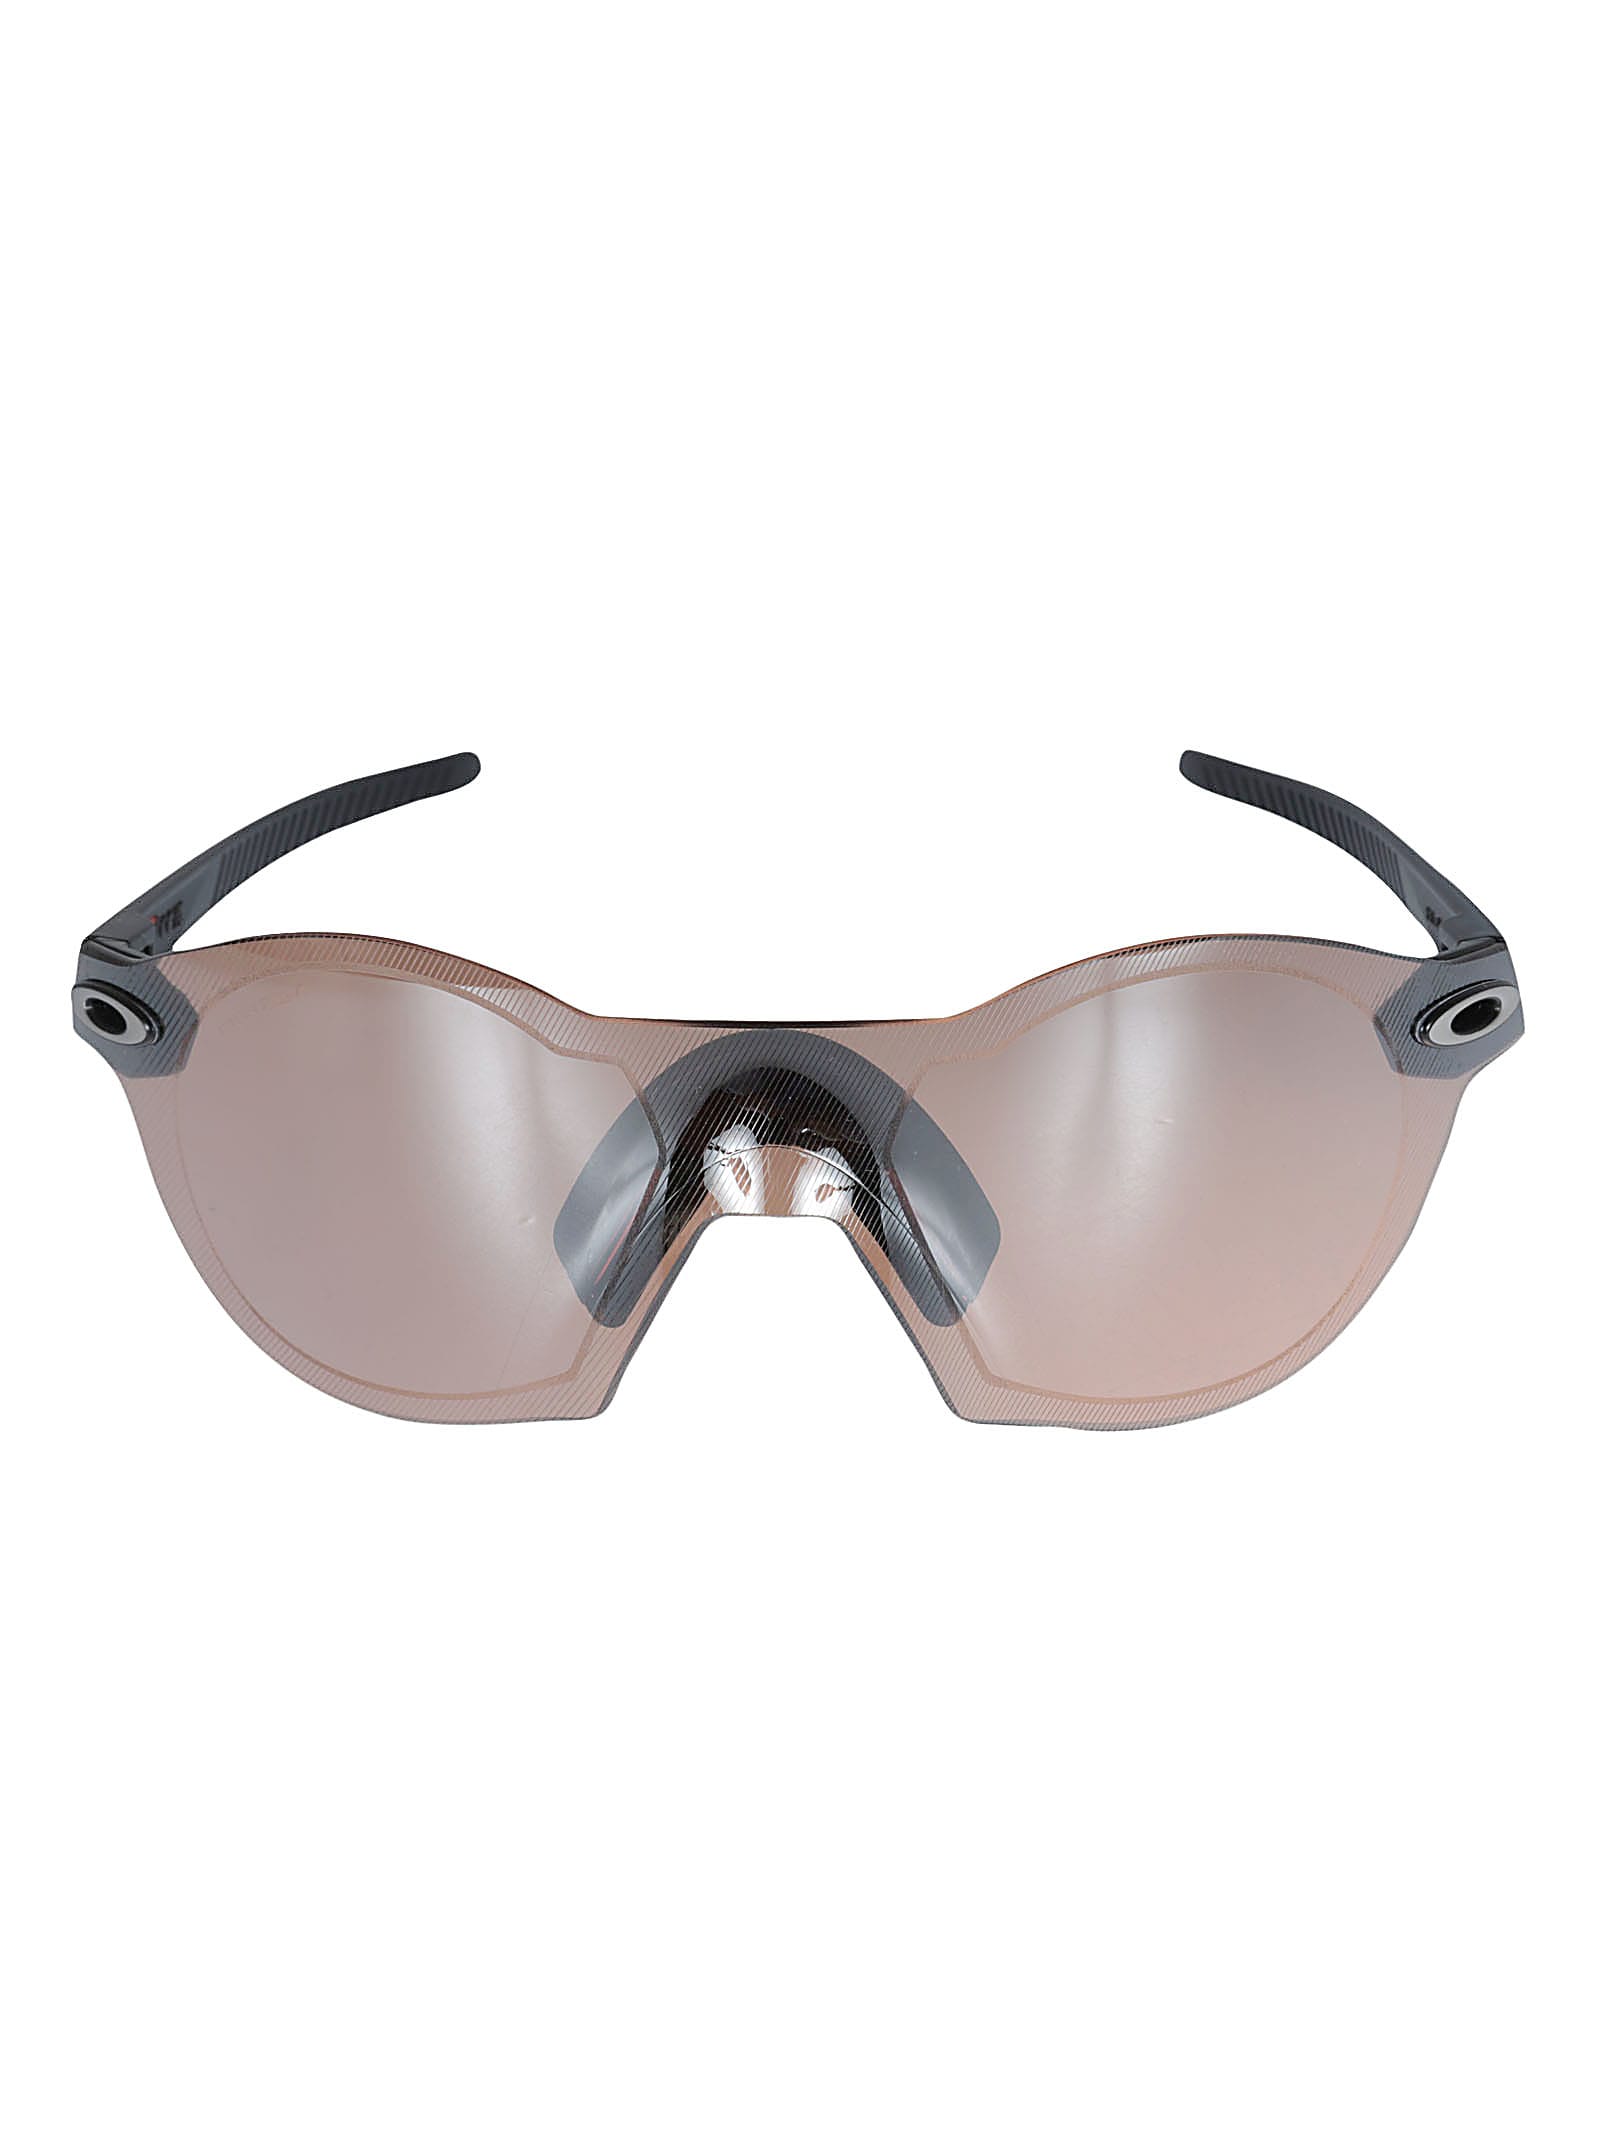 Oakley Sole Shield Sunglasses In 909805